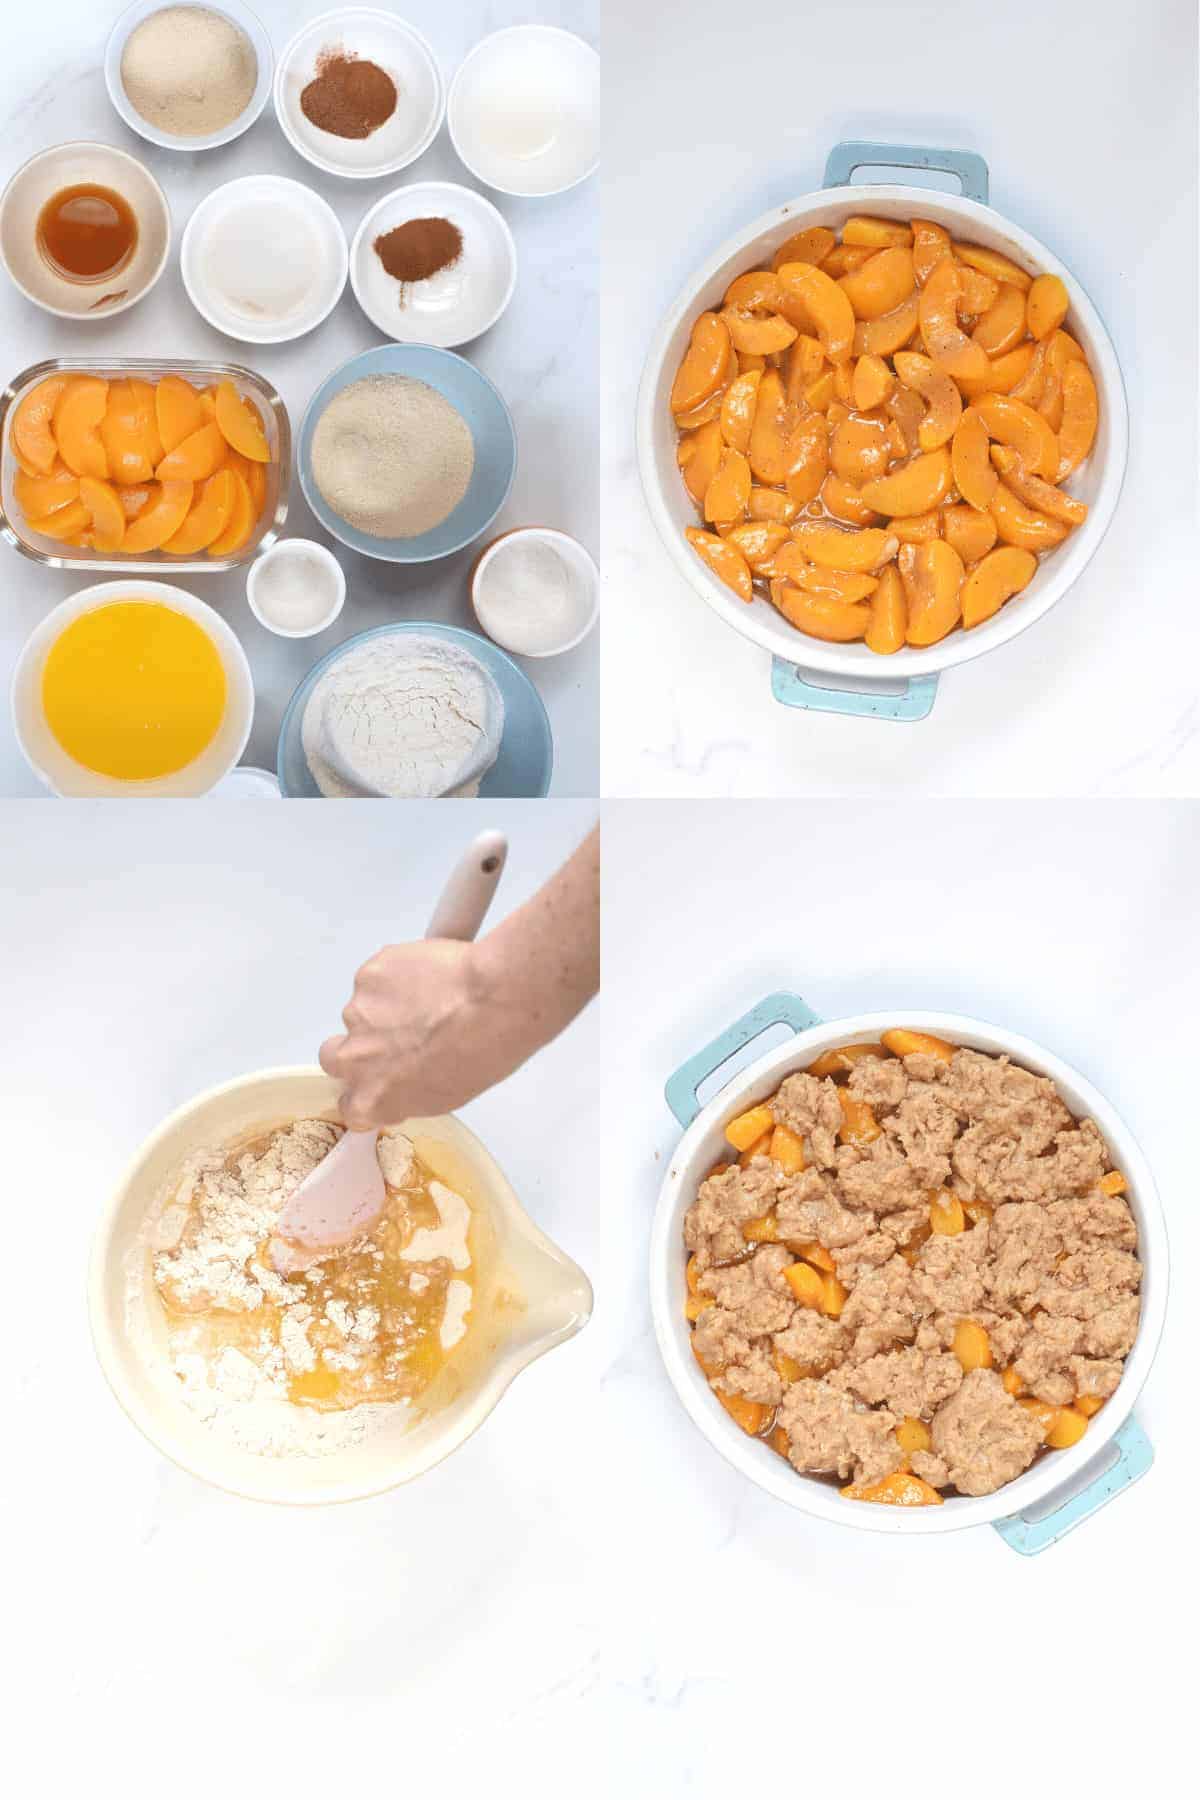 How to make Vegan Peach CobblerHow to make Vegan Peach Cobbler